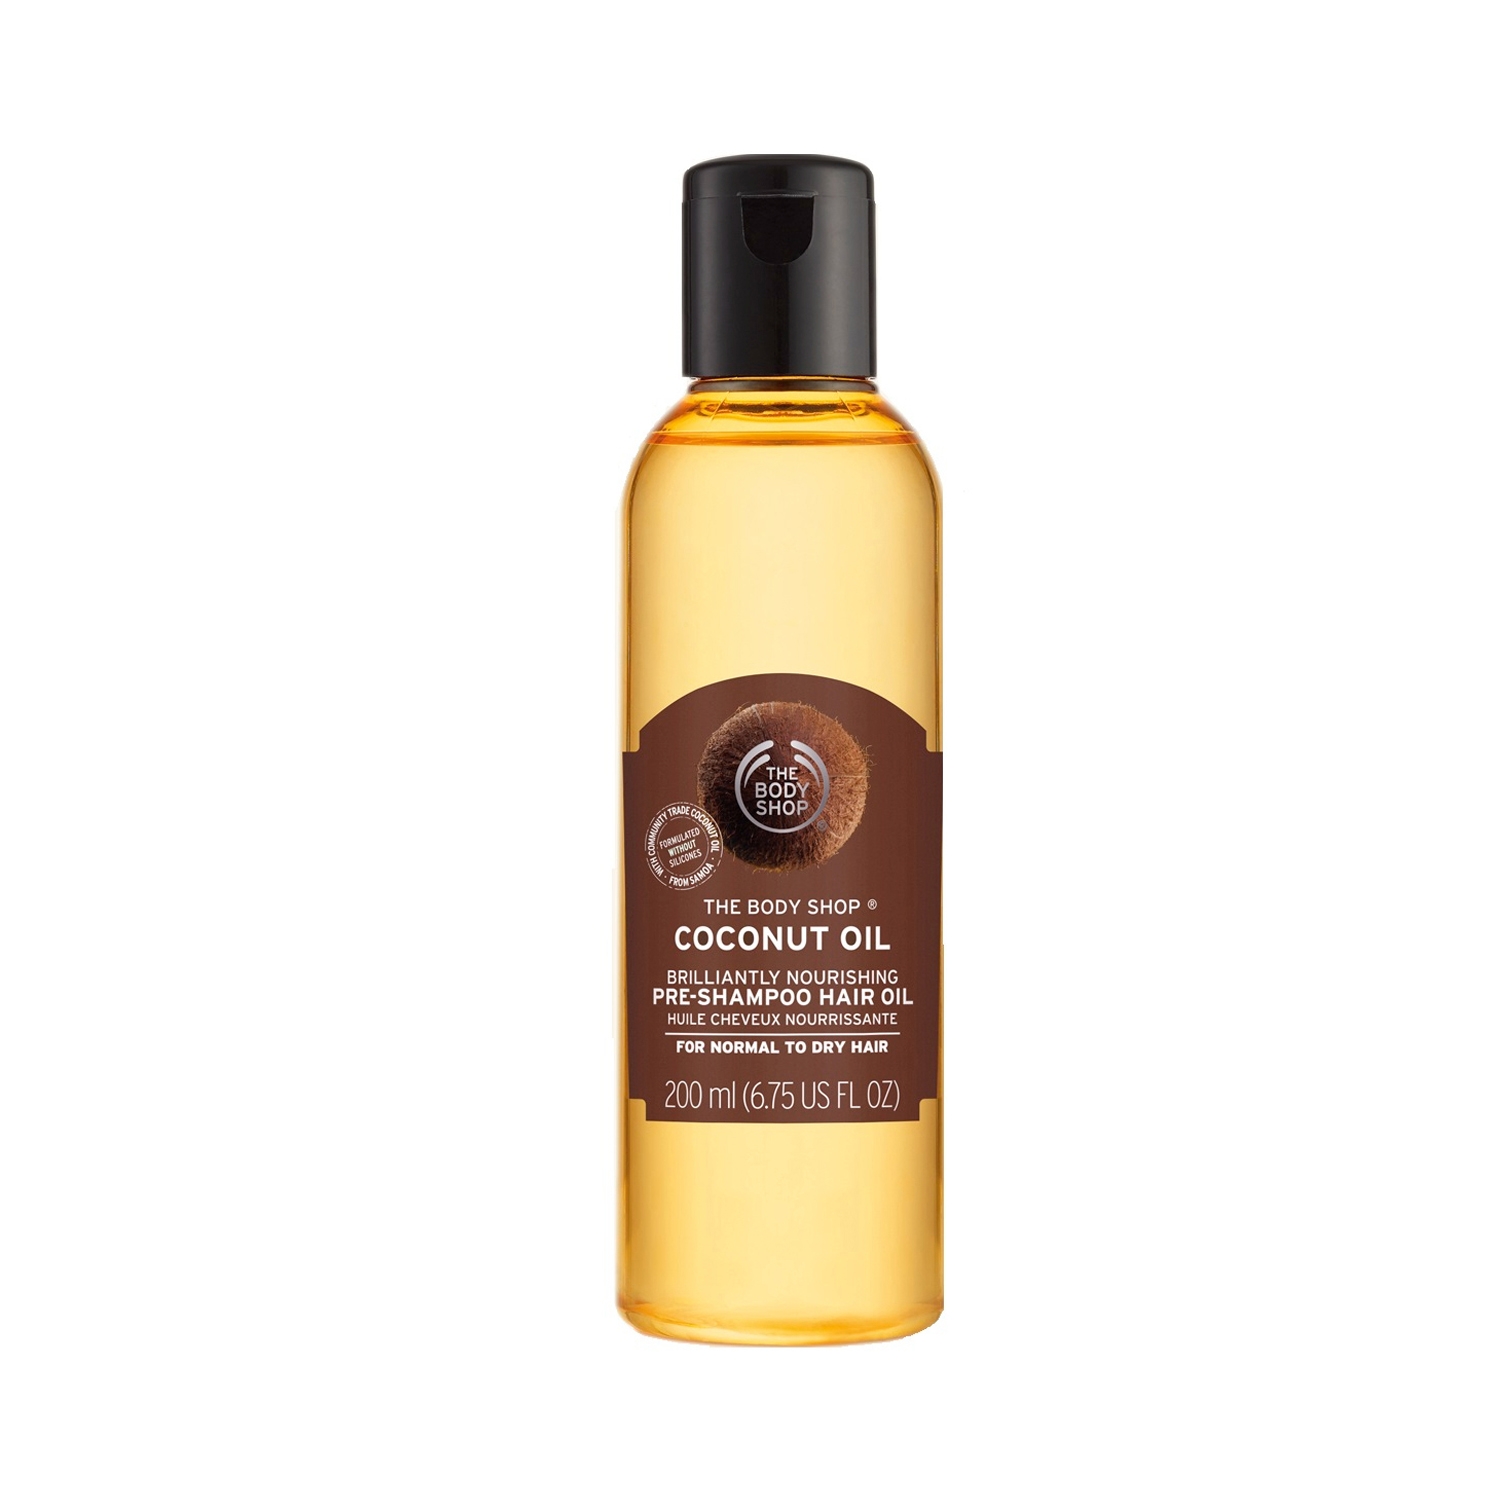 The Body Shop | The Body Shop Coconut Oil Brilliantly Nourishing Pre-Shampoo Hair Oil (200ml)